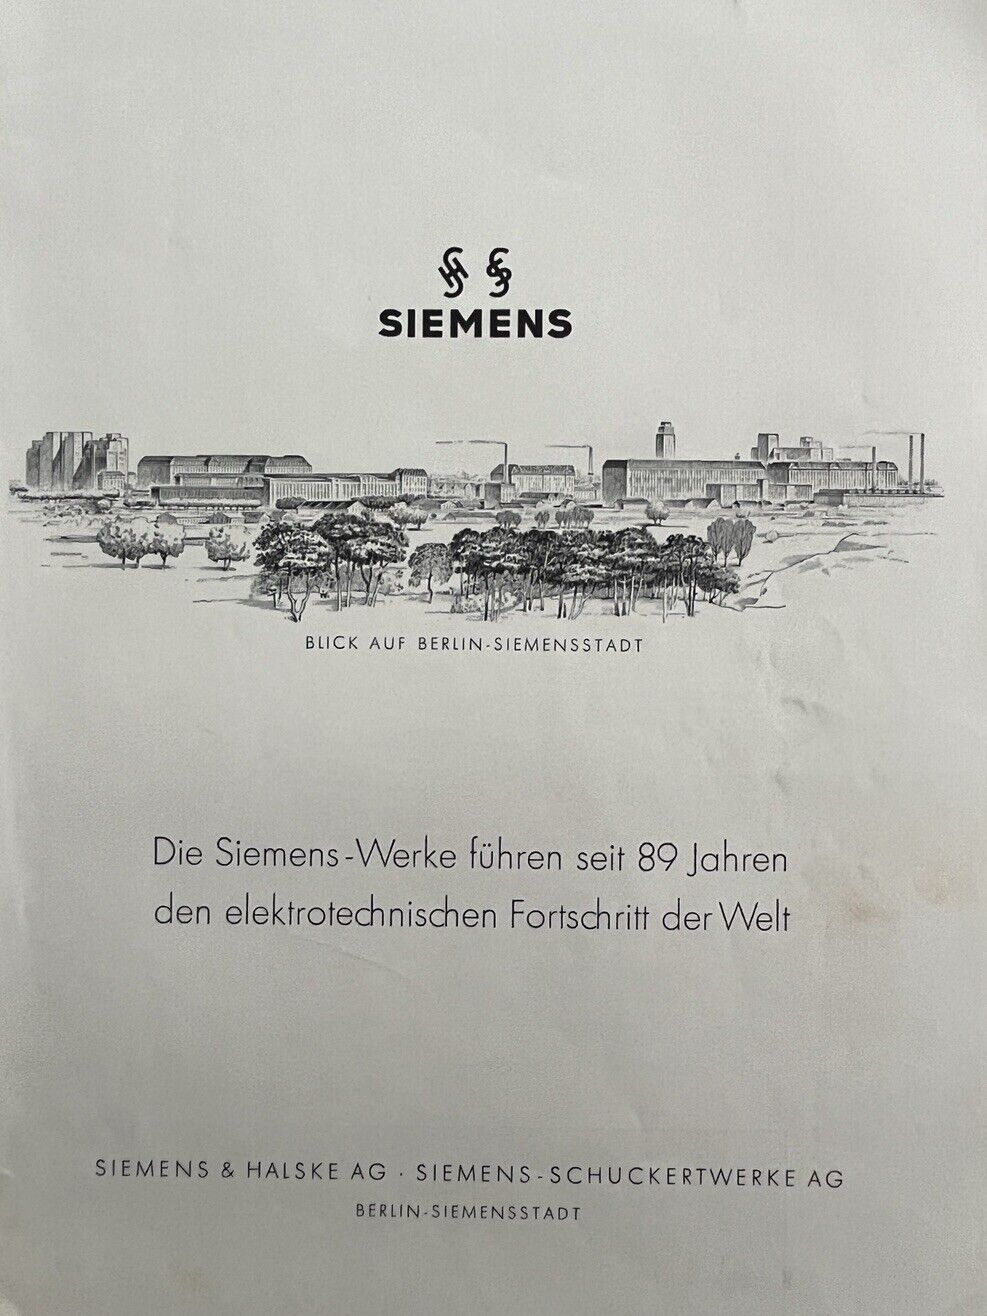 Vintage Print Ad Siemens Company Berlin Germany 1936